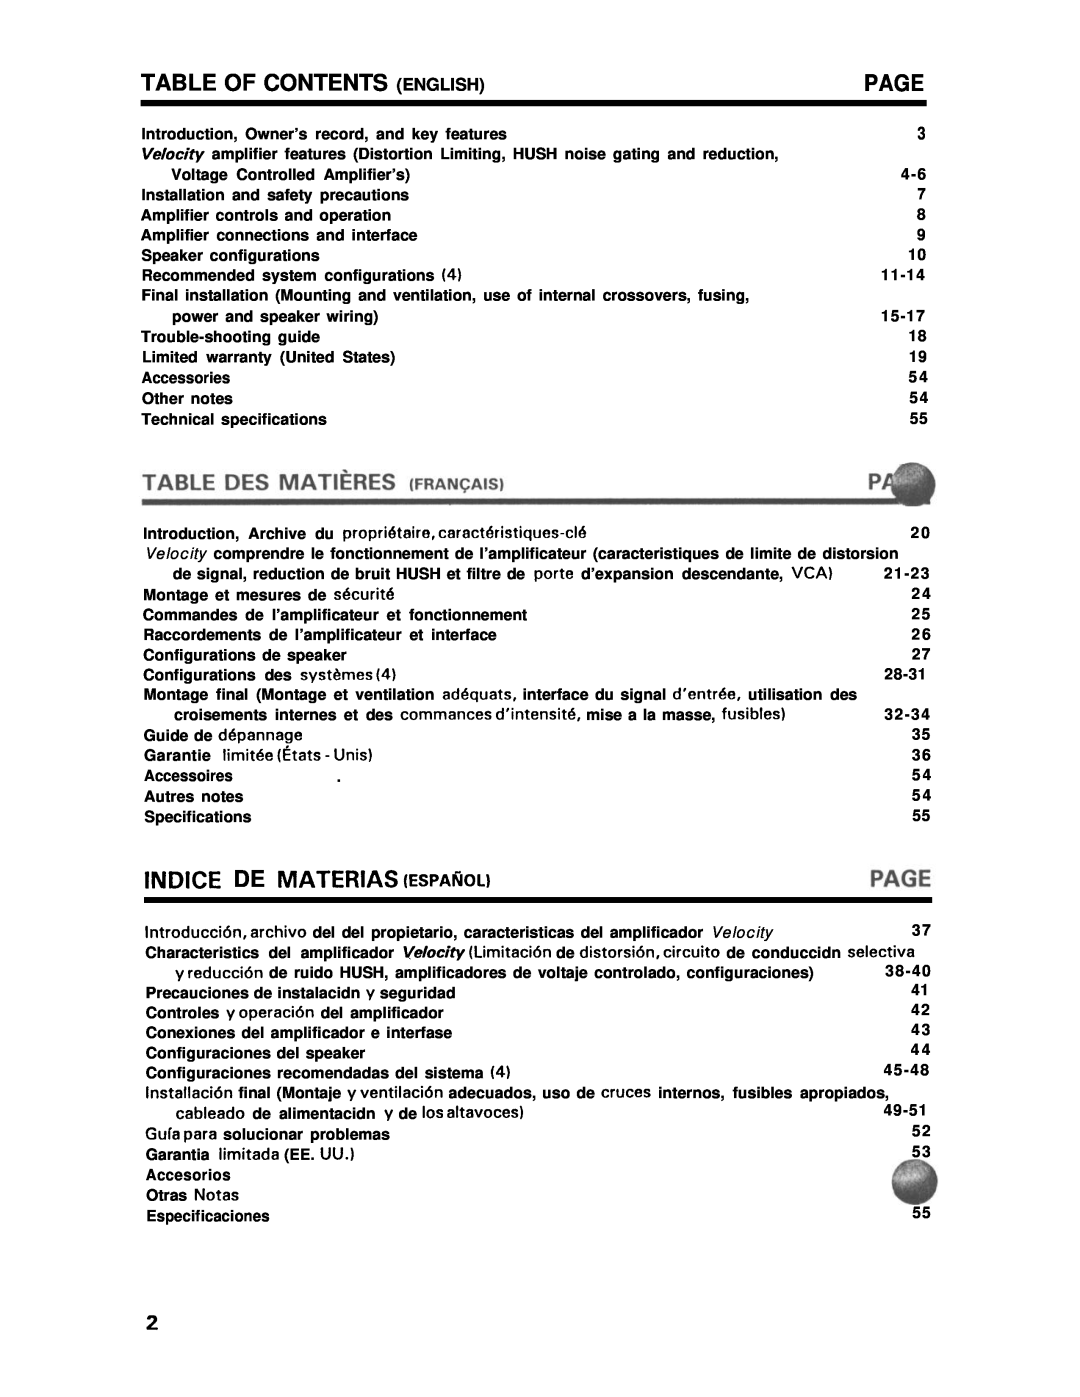 Blaupunkt V7000 manual Table Of Contents English, Page, INDICE DE MATERIAS ESPAfiOL 